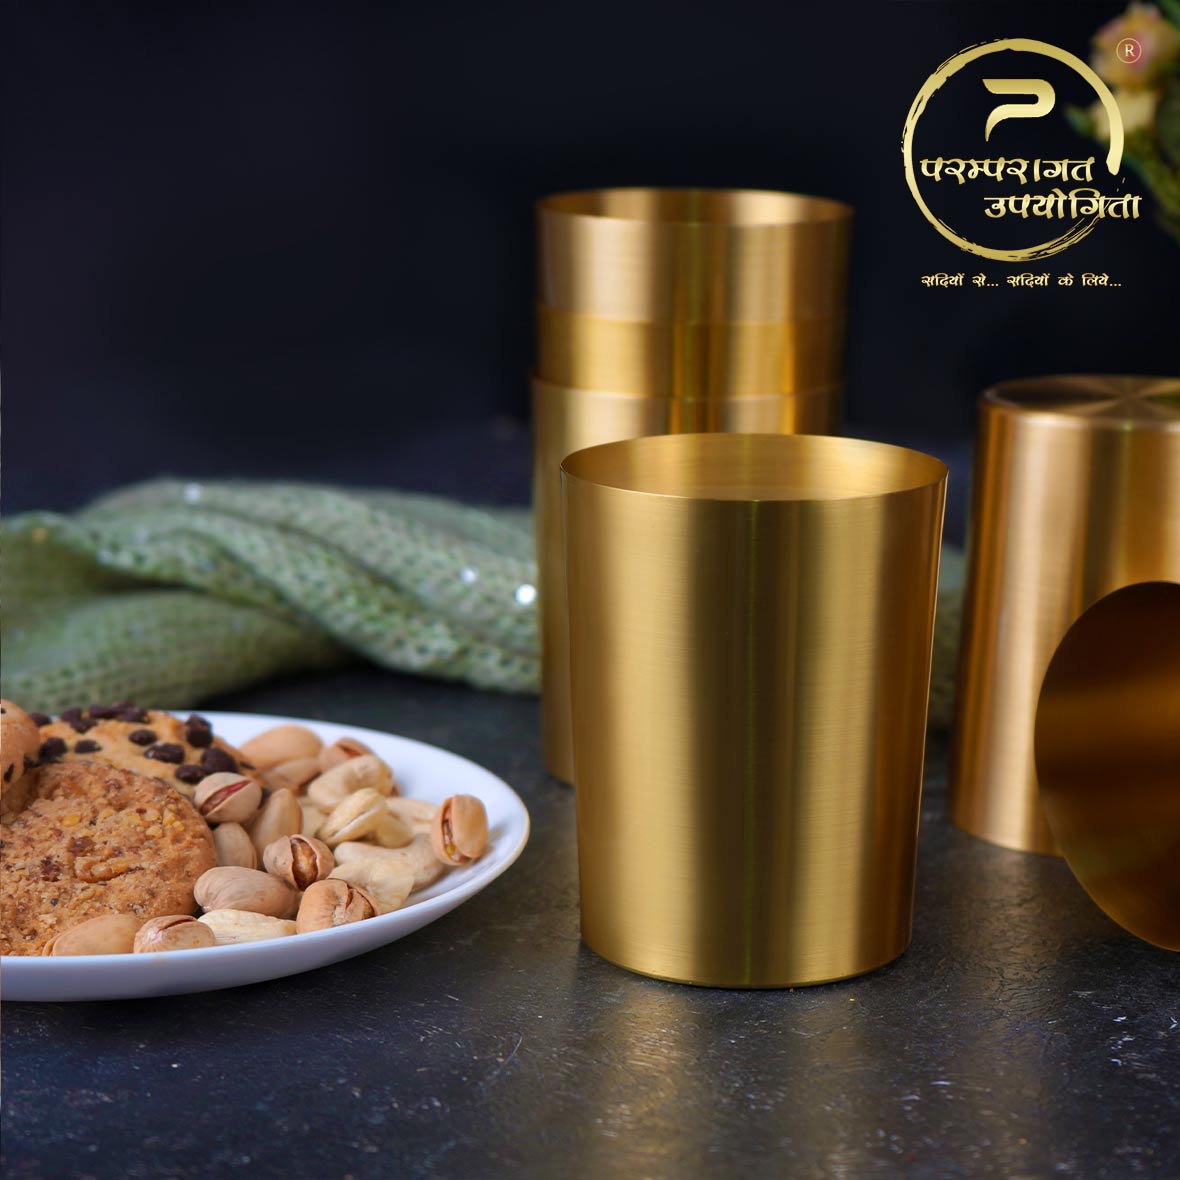 Paramparagat Upyogita Swarna Devyani Brass Glass Gift Set